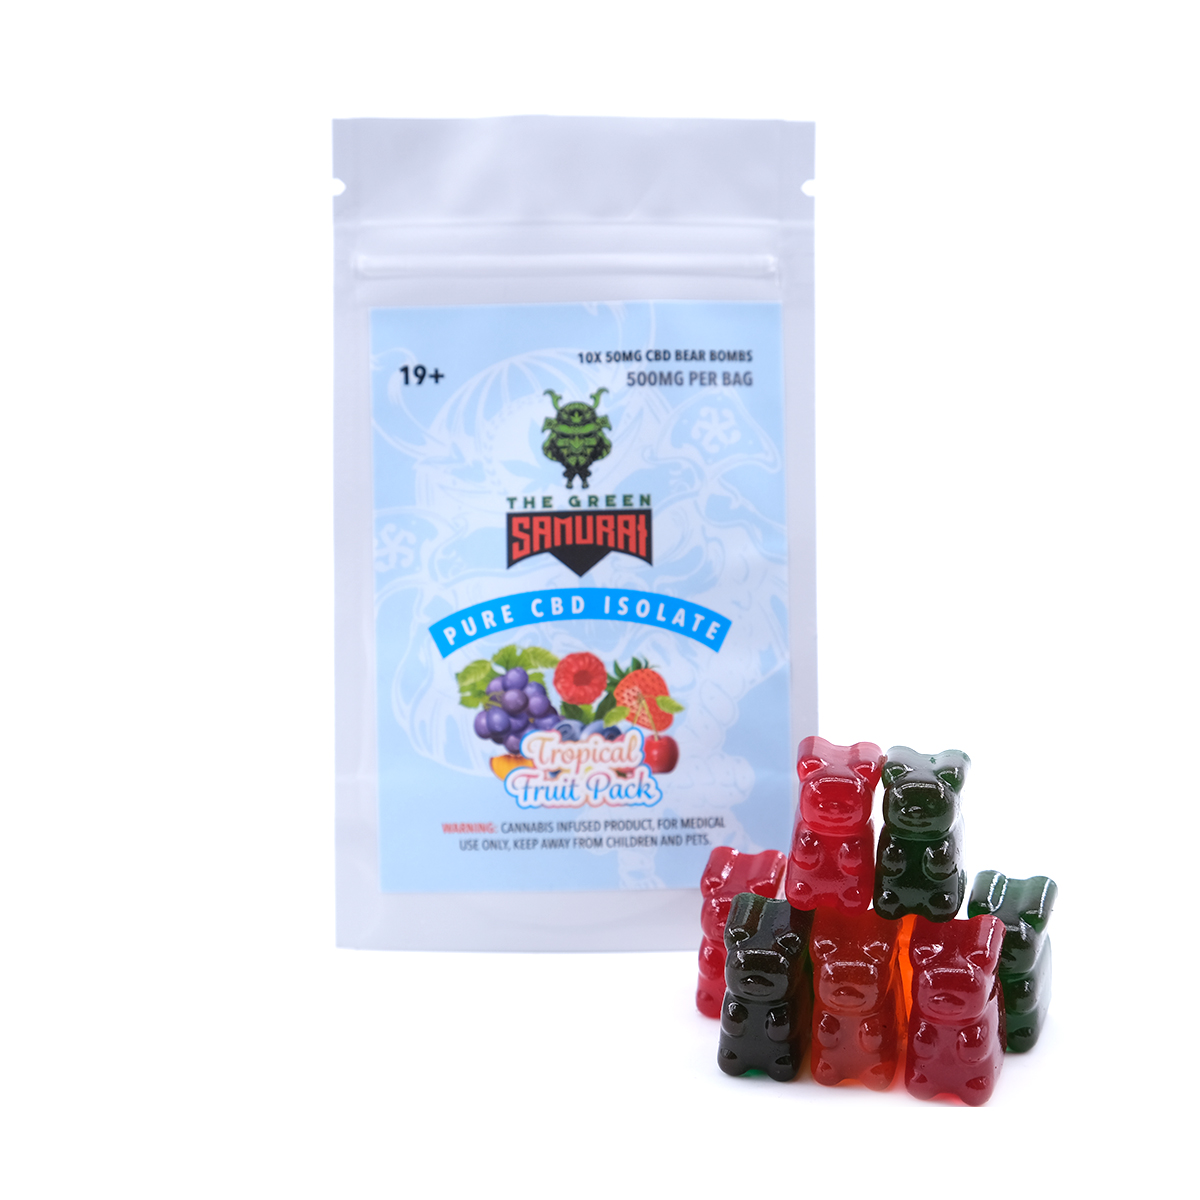 The Green Samurai – 500mg CBD Bear Bombs – Tropical Fruit Pack